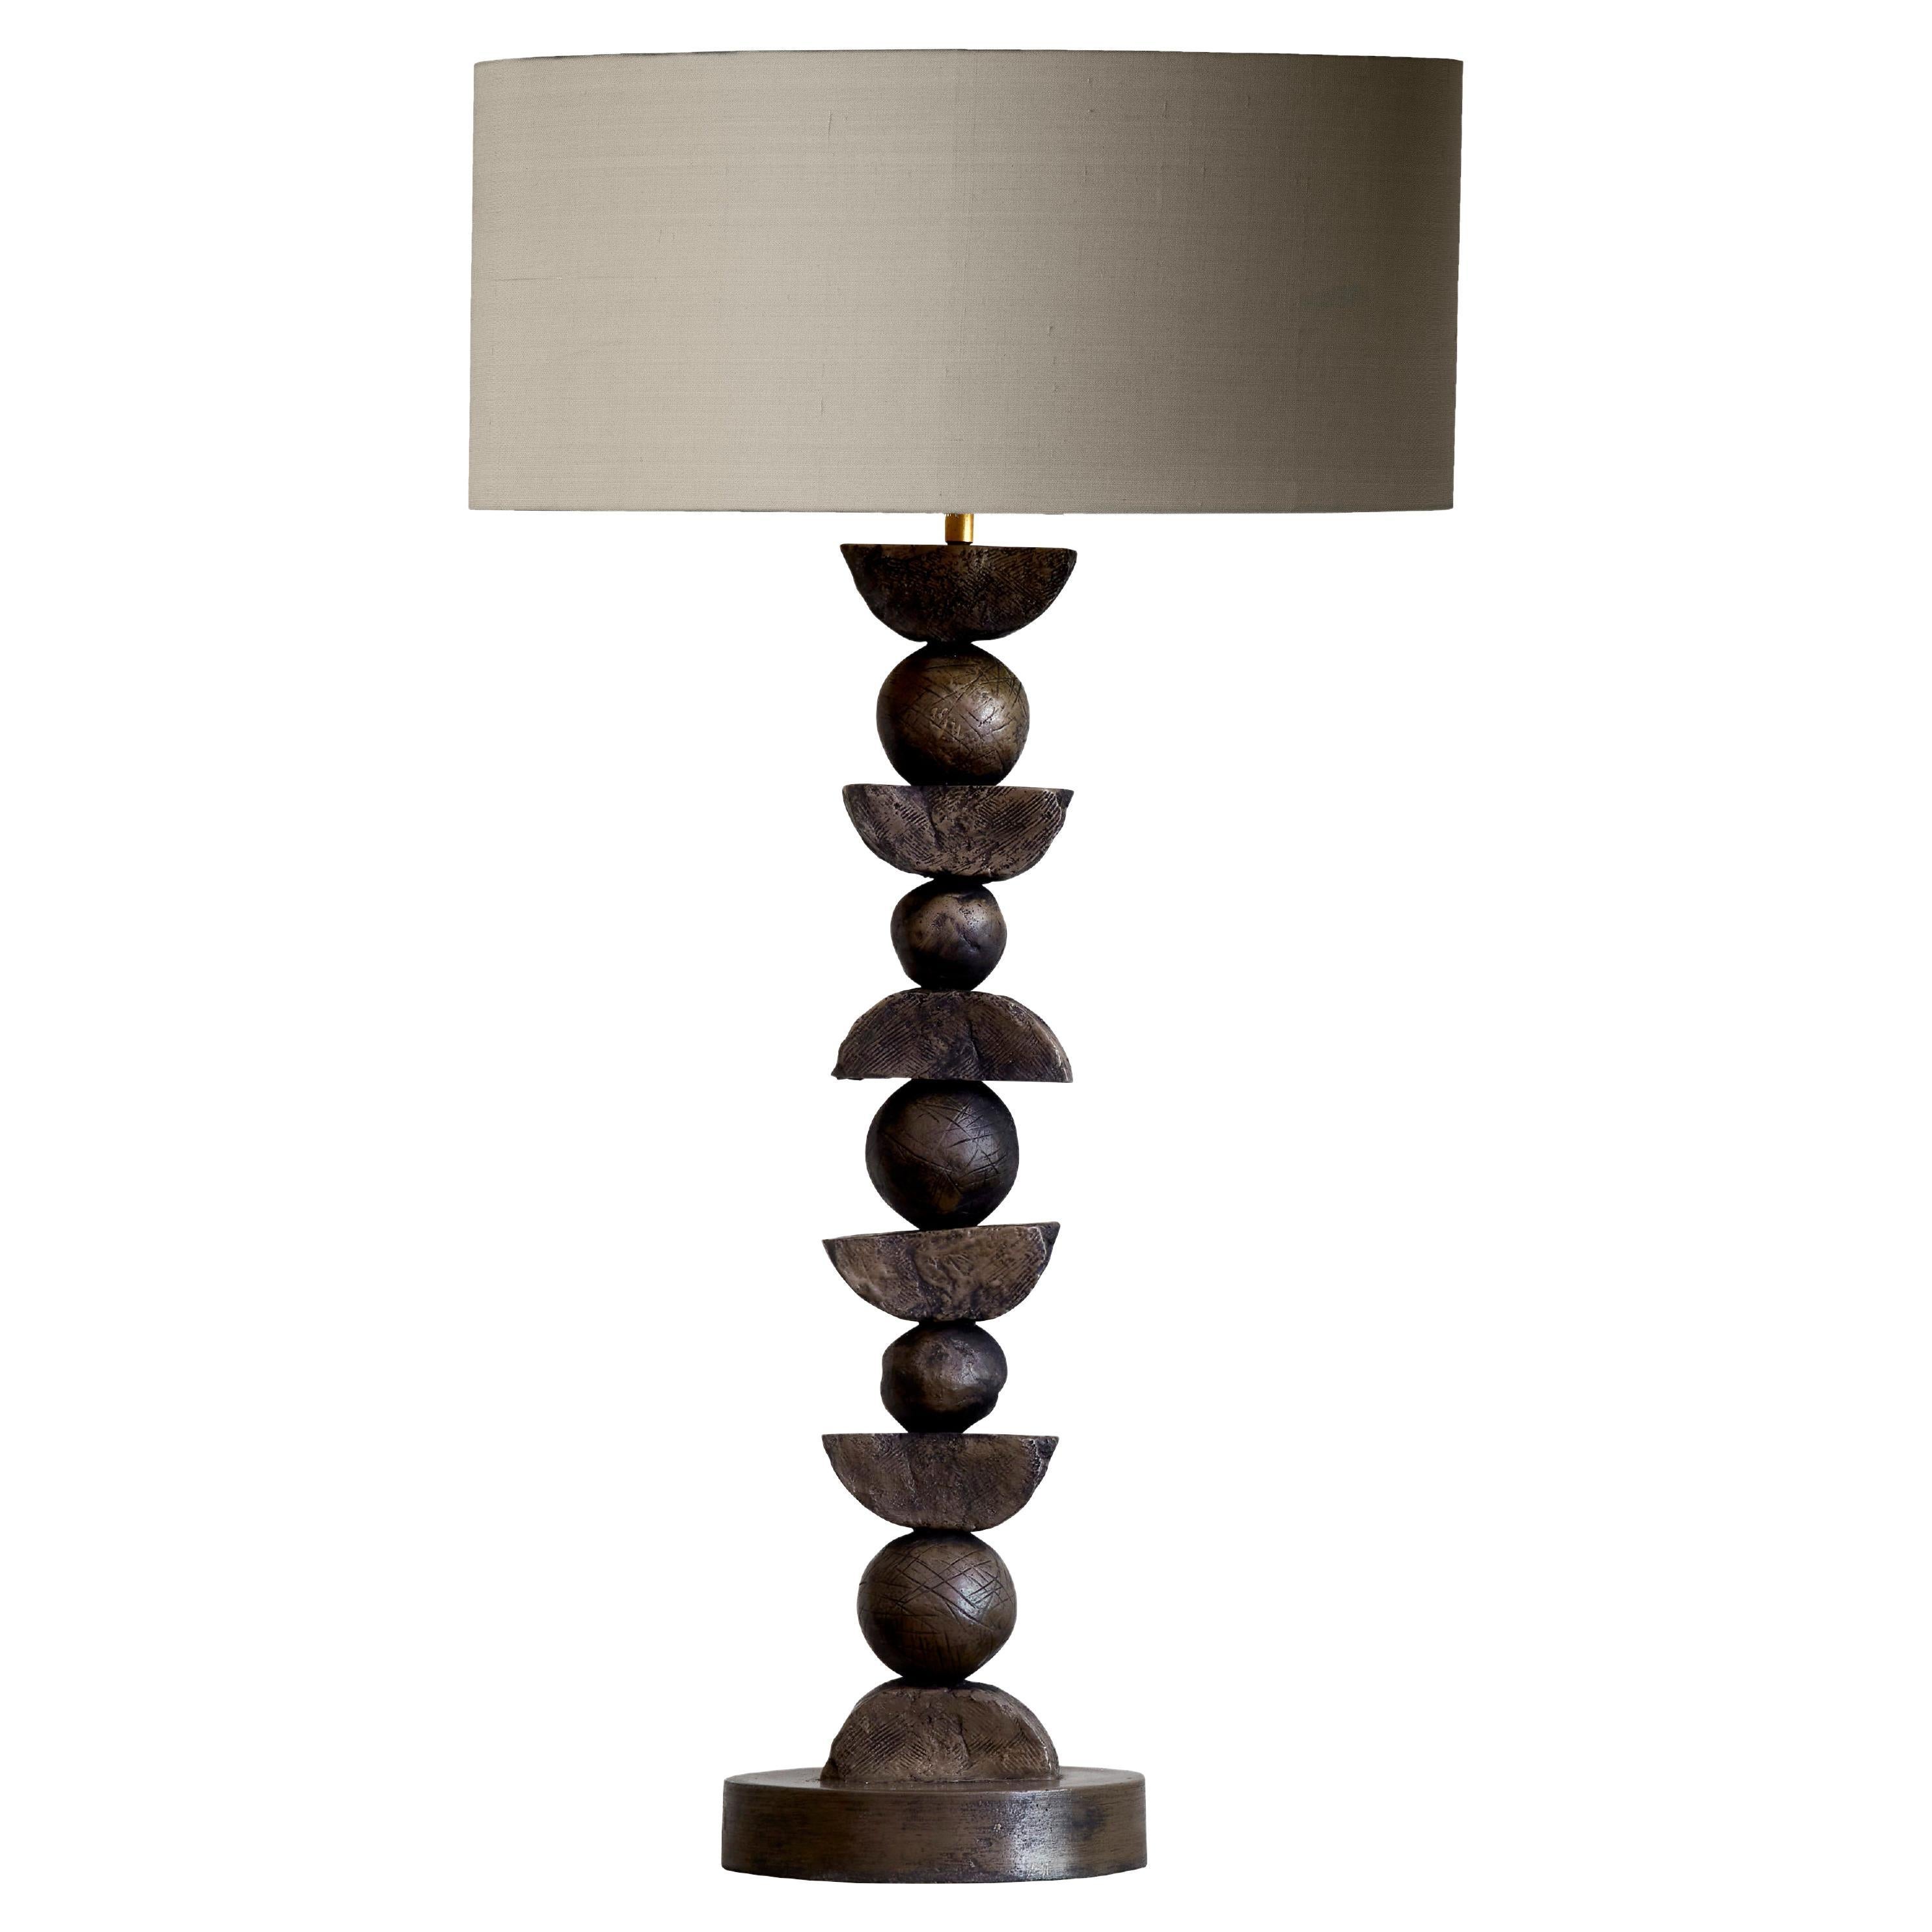 European, Silhouette Table Lamp by Margit Wittig, Bronze Resin For Sale